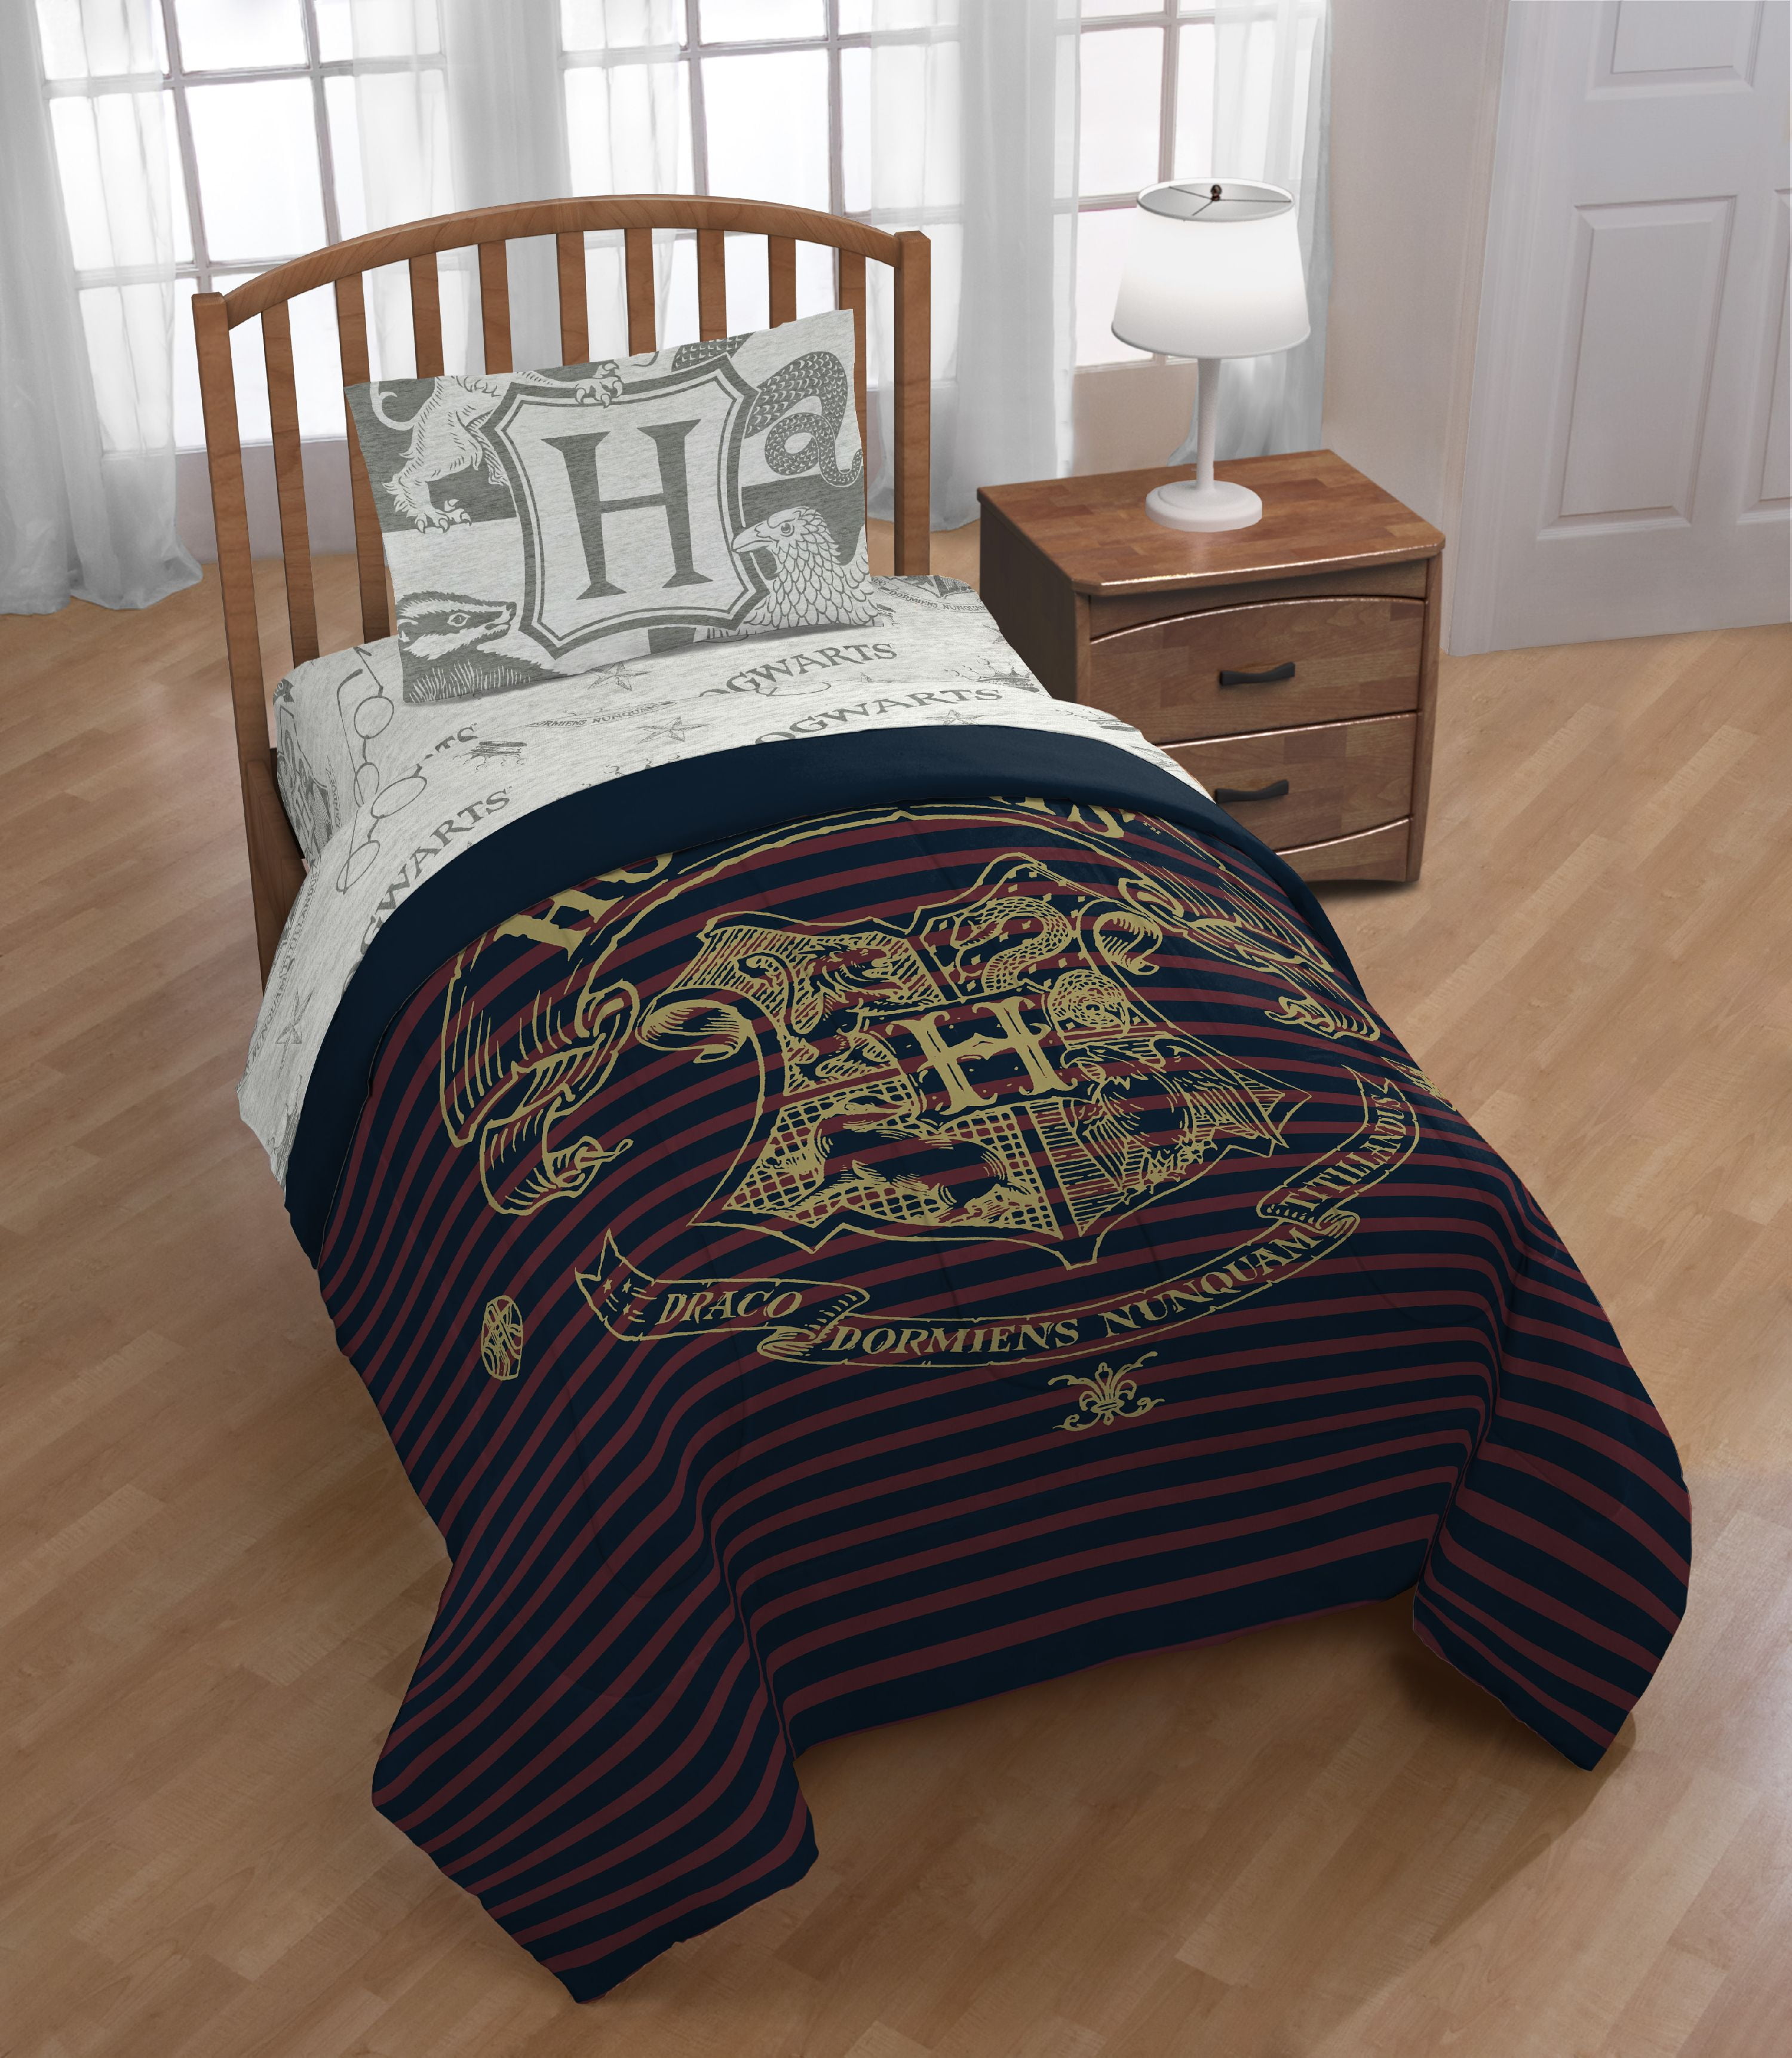 Flat Sheet Comforter Pillow Harry Potter 4 Pc Toddler Bed Set Fitted Sheet 